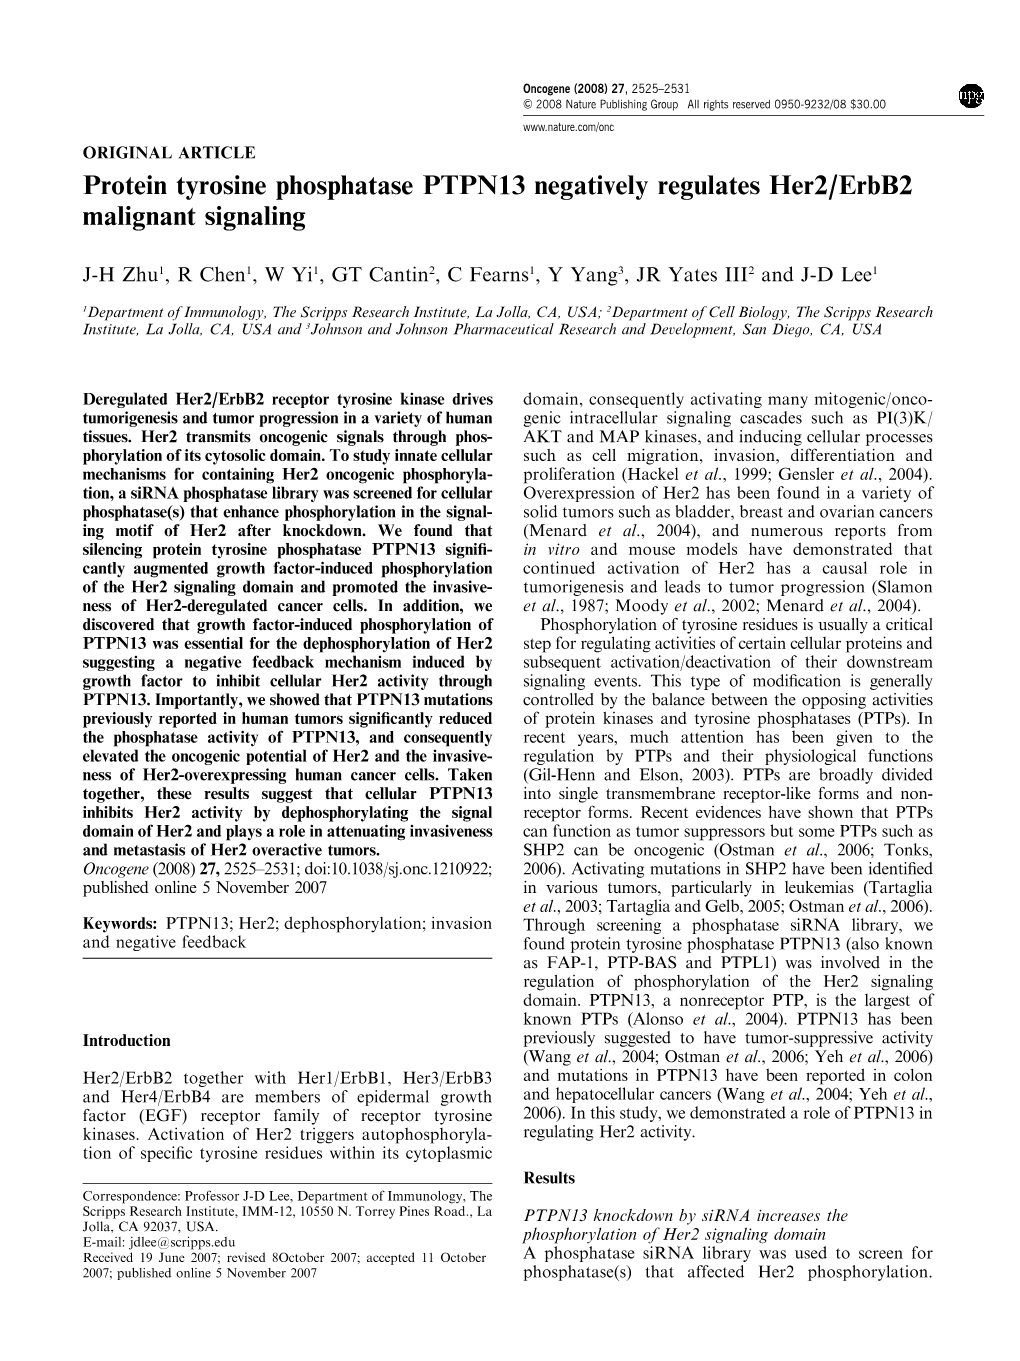 Protein Tyrosine Phosphatase PTPN13 Negatively Regulates Her2/Erbb2 Malignant Signaling